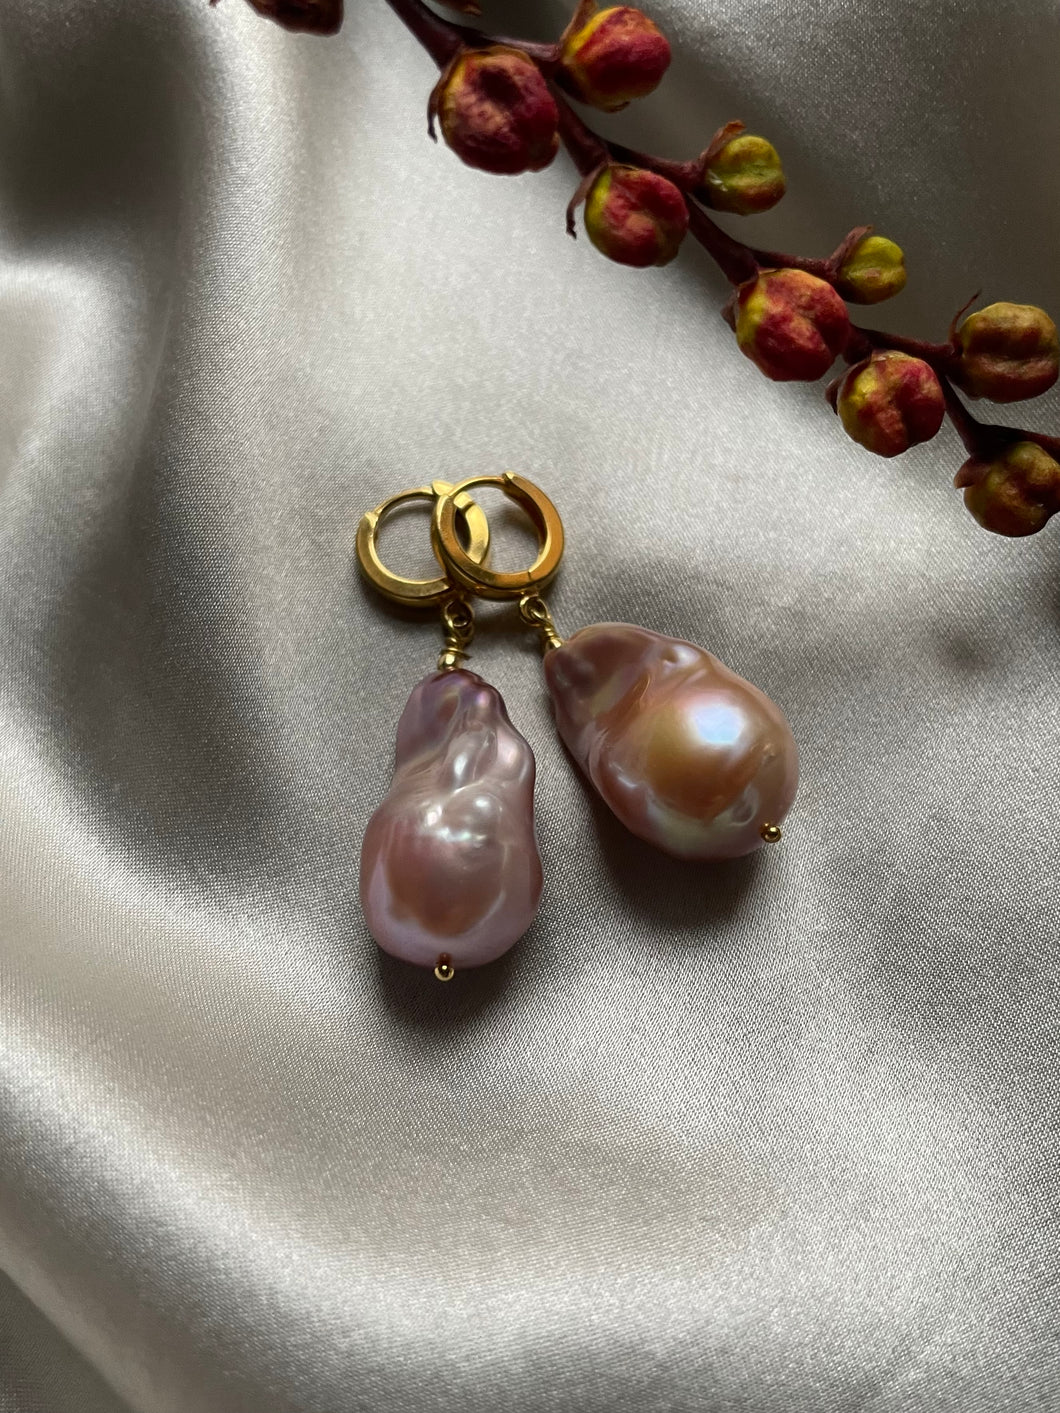 Baroque freshwater pearl earrings in Salmon pink